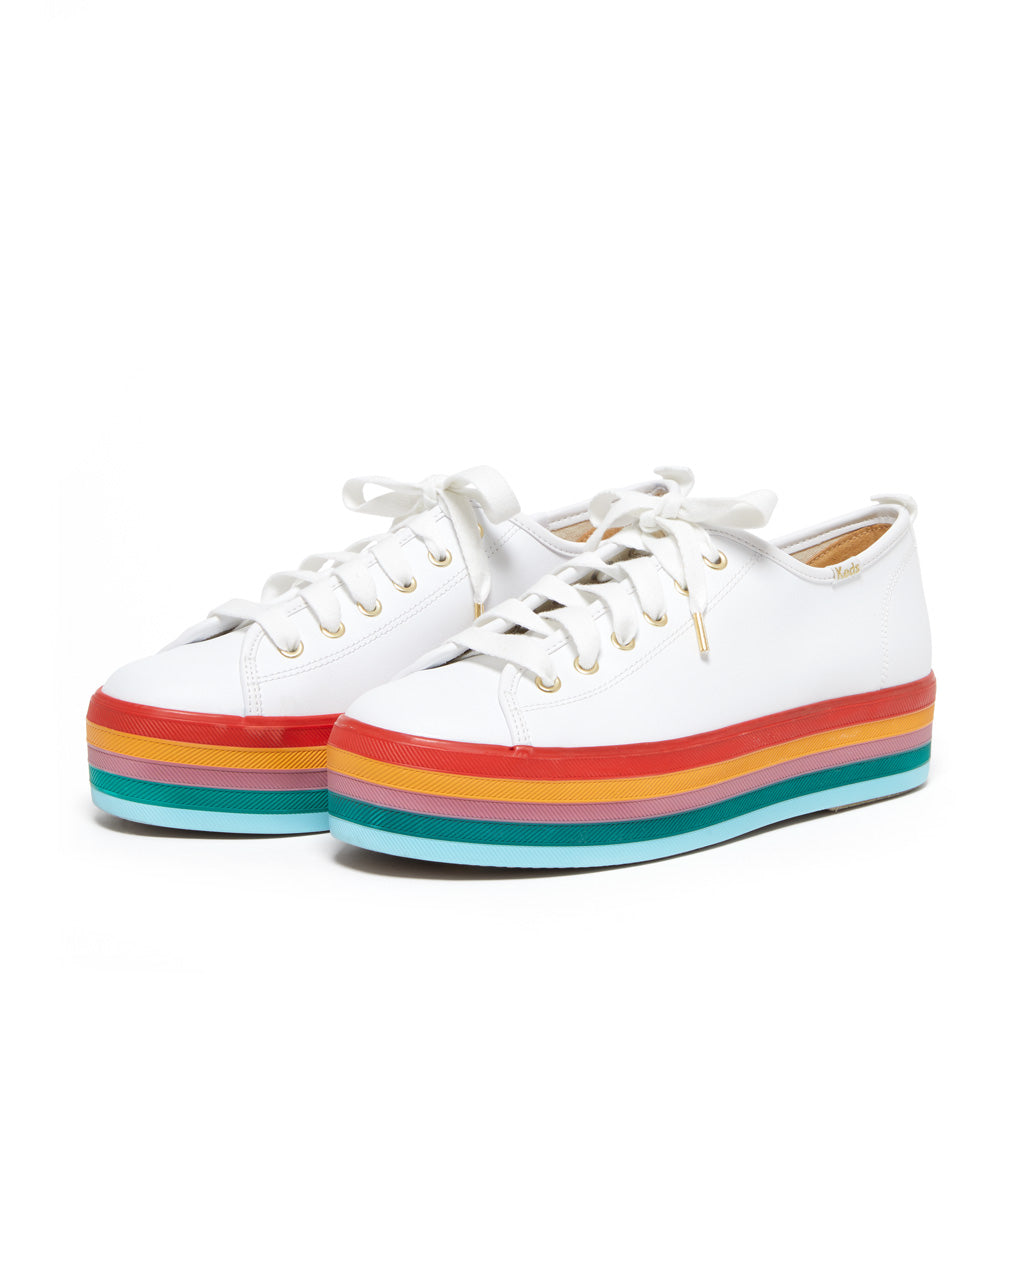 rainbow tennis shoes